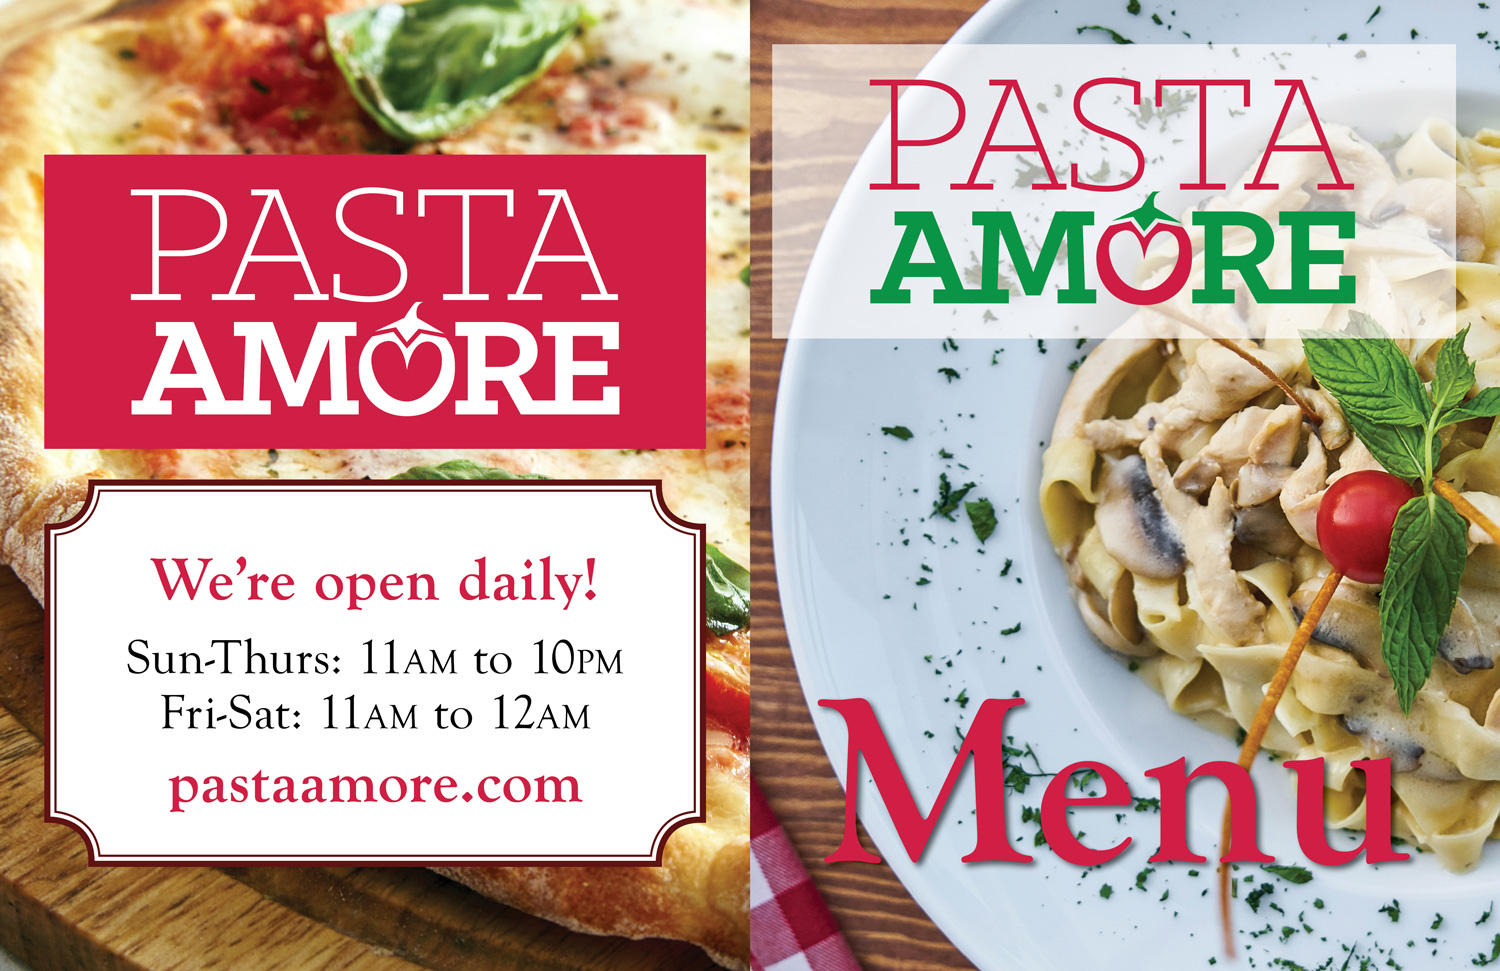 Pasta Amore menu cover design